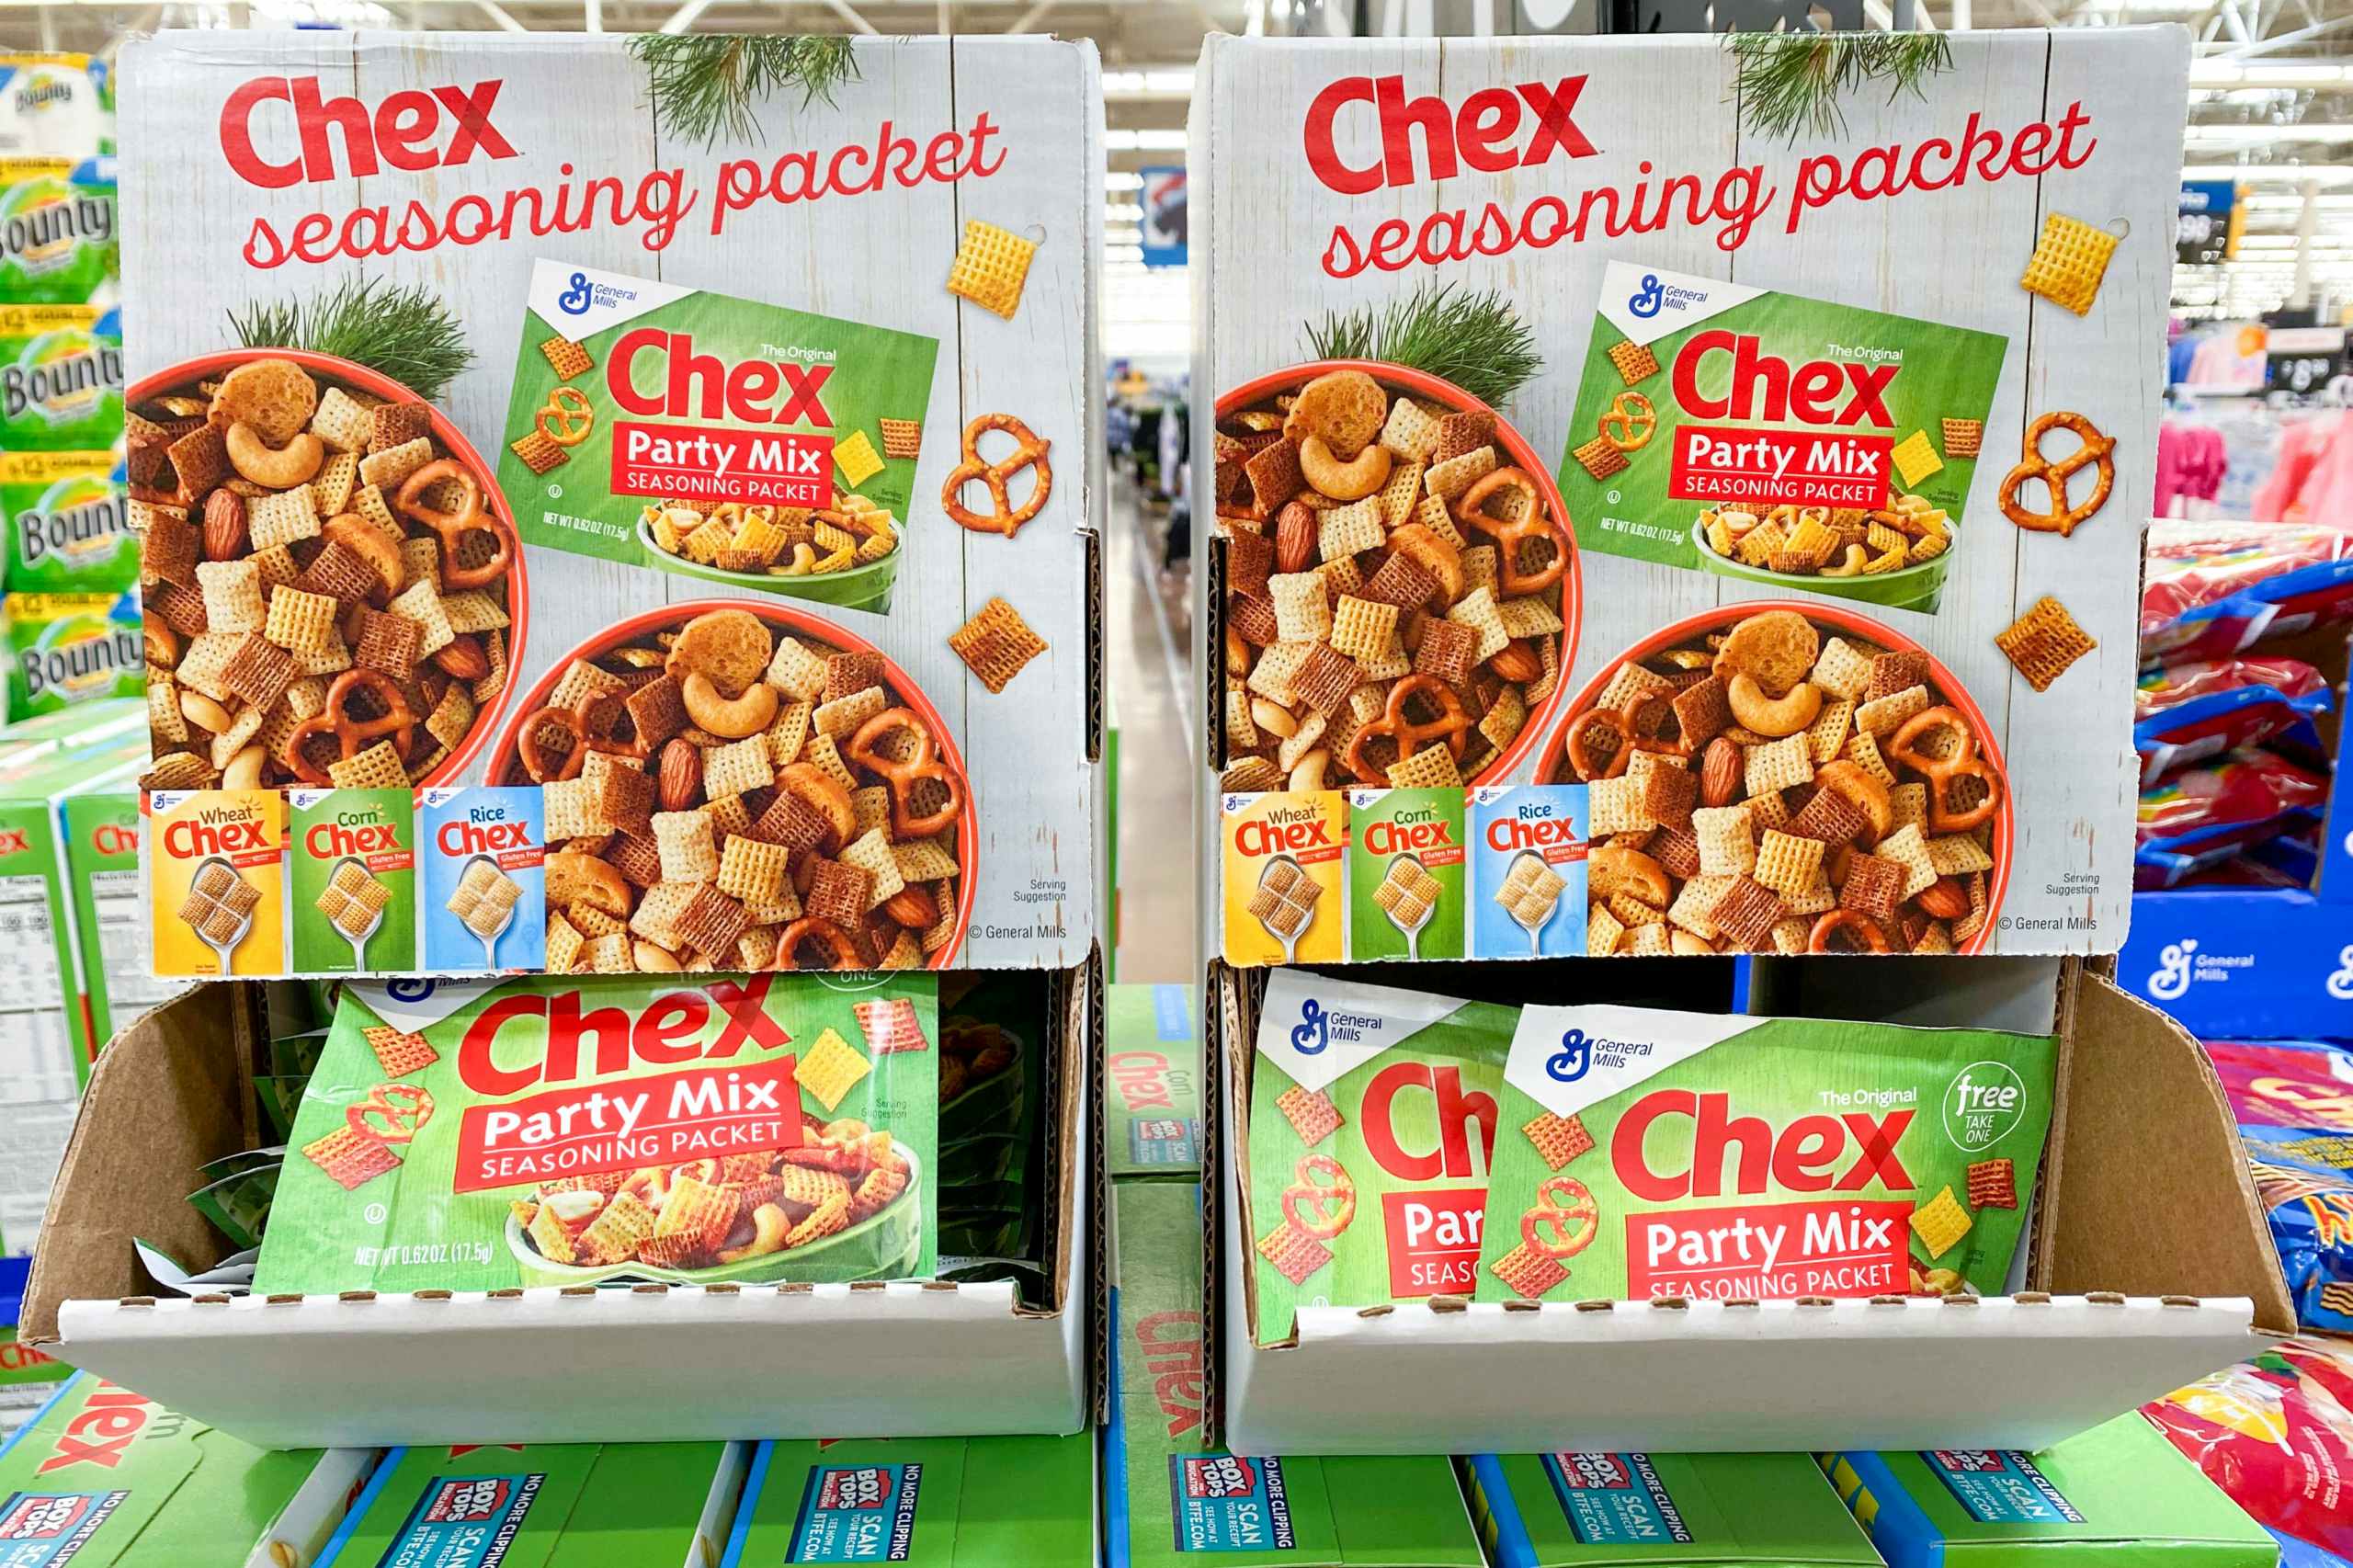 Chex Party Mix Seasoning Packet at Walmart